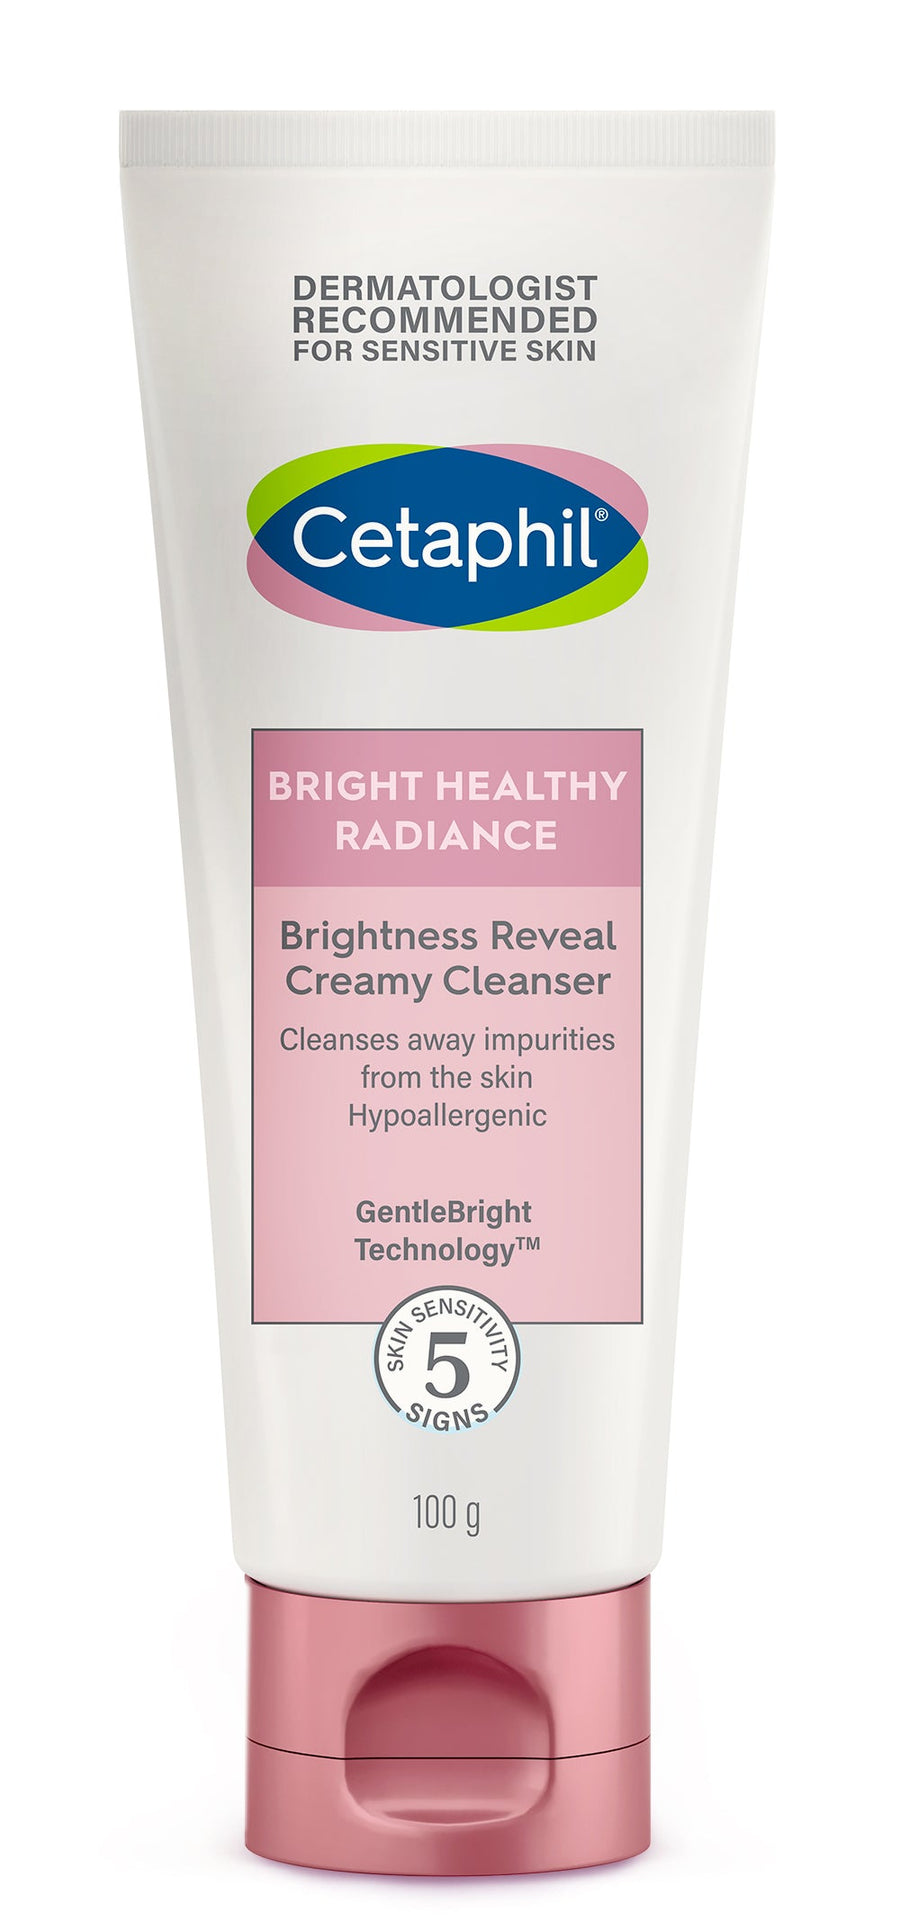 Cetaphil-BHR-Brightness-Reveal-Creamy-Cleanser